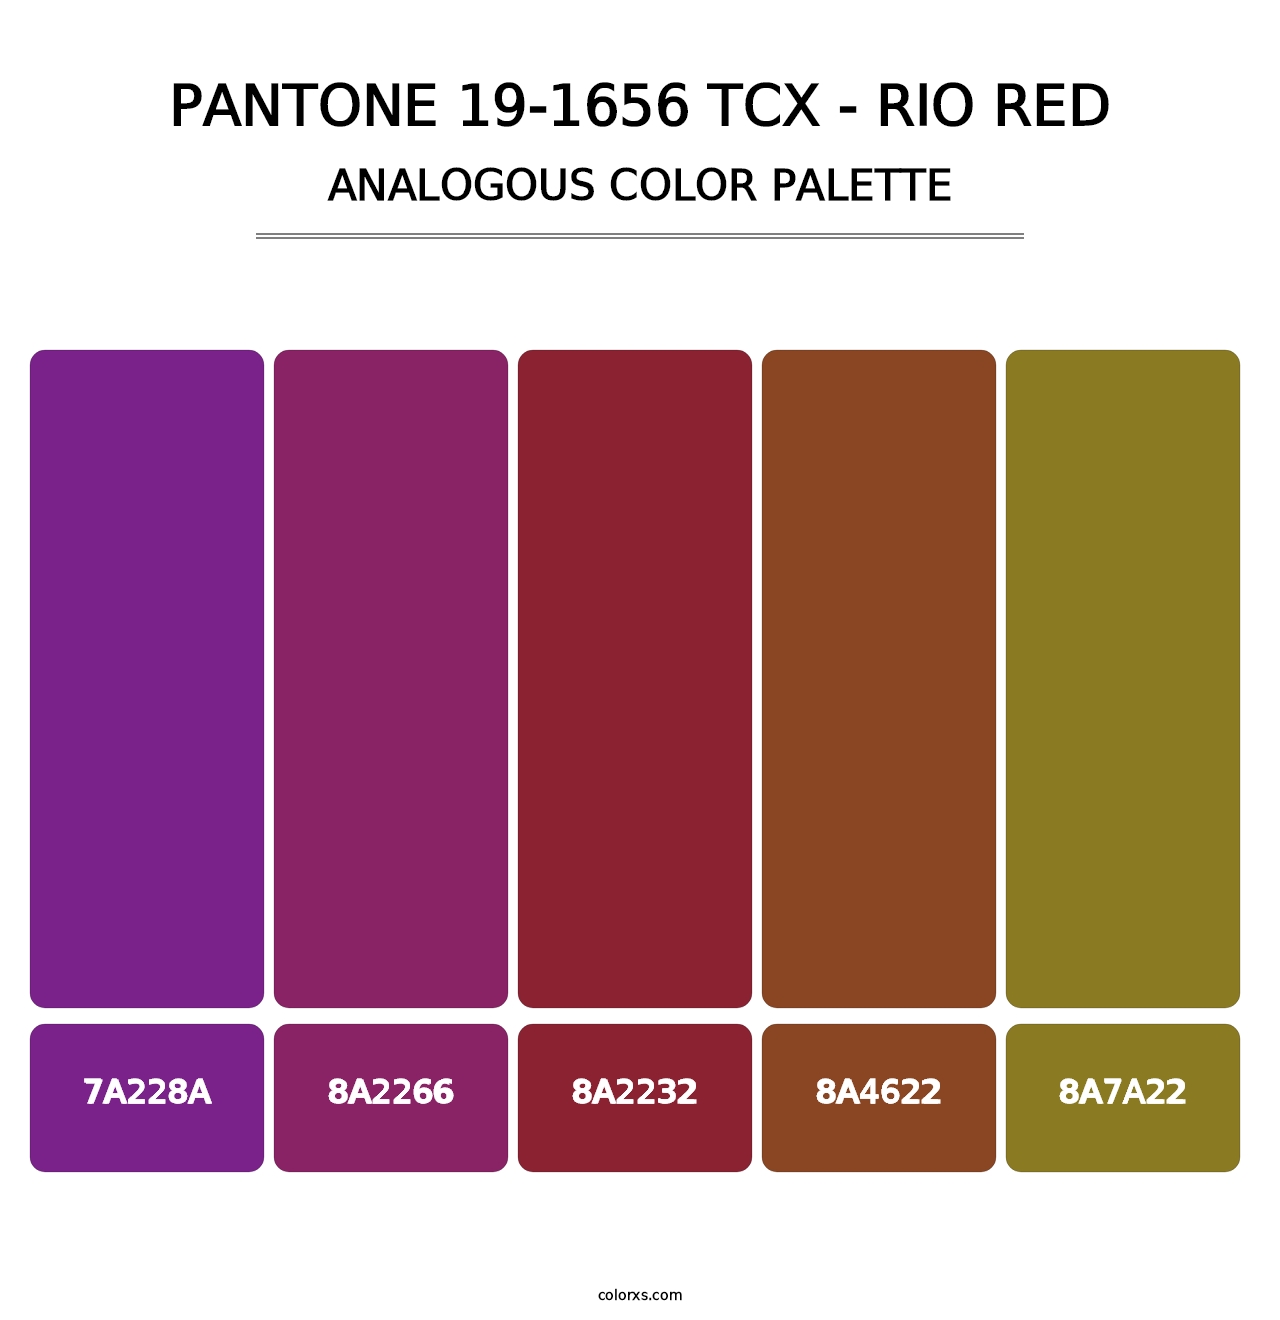 PANTONE 19-1656 TCX - Rio Red - Analogous Color Palette